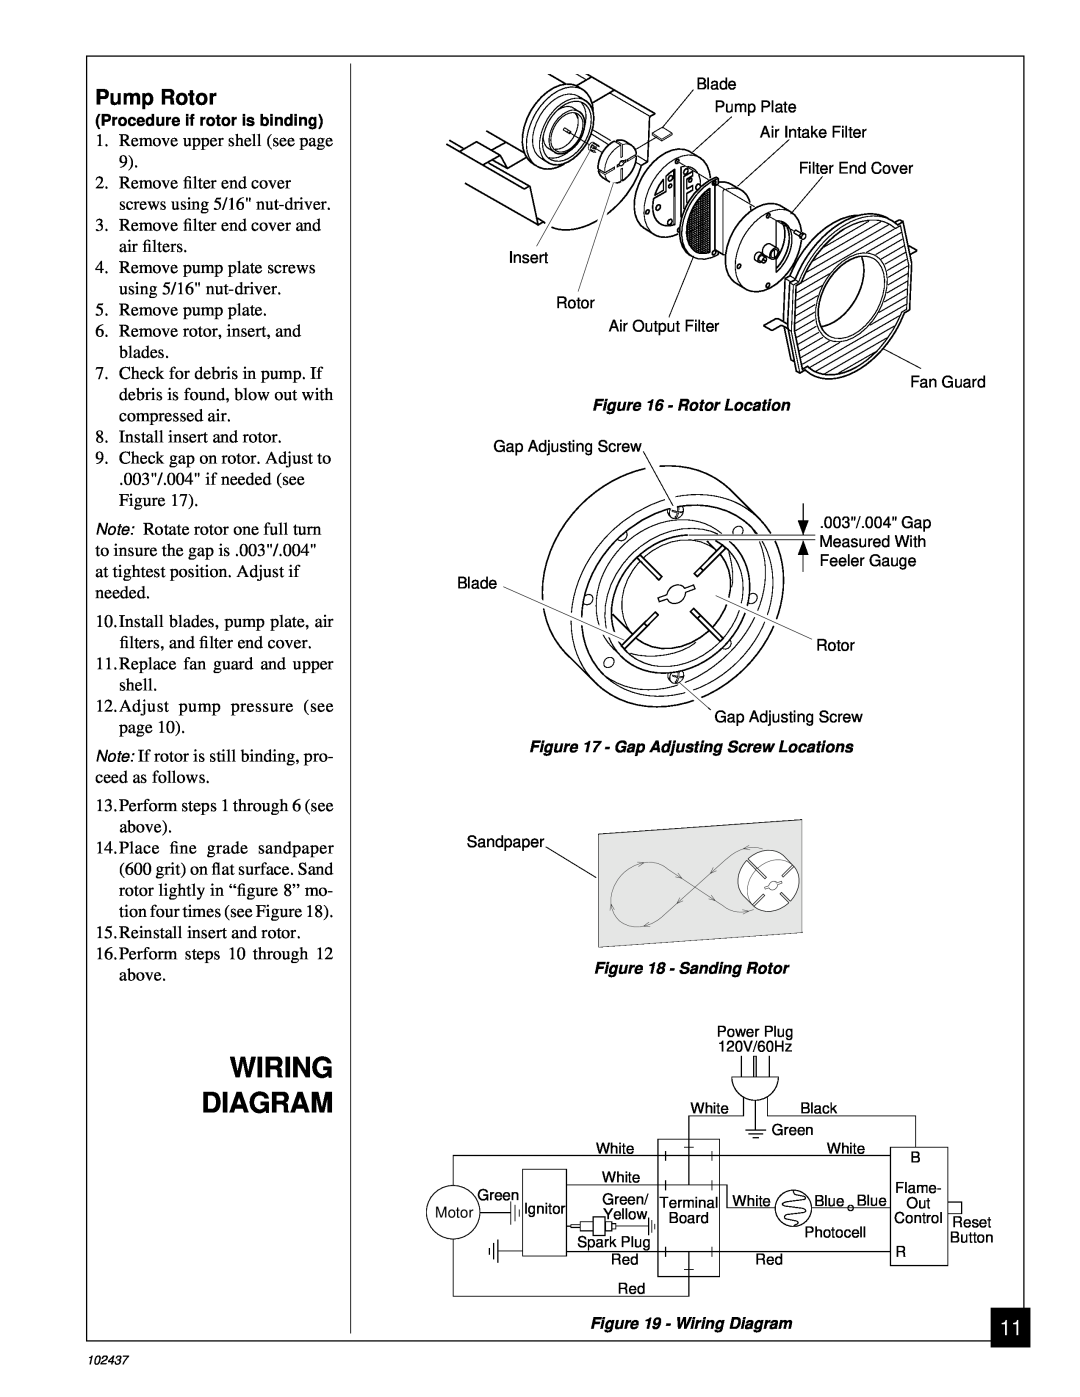 Desa PORTABLE FORCED AIR HEATERS owner manual Wiring Diagram, Pump Rotor 